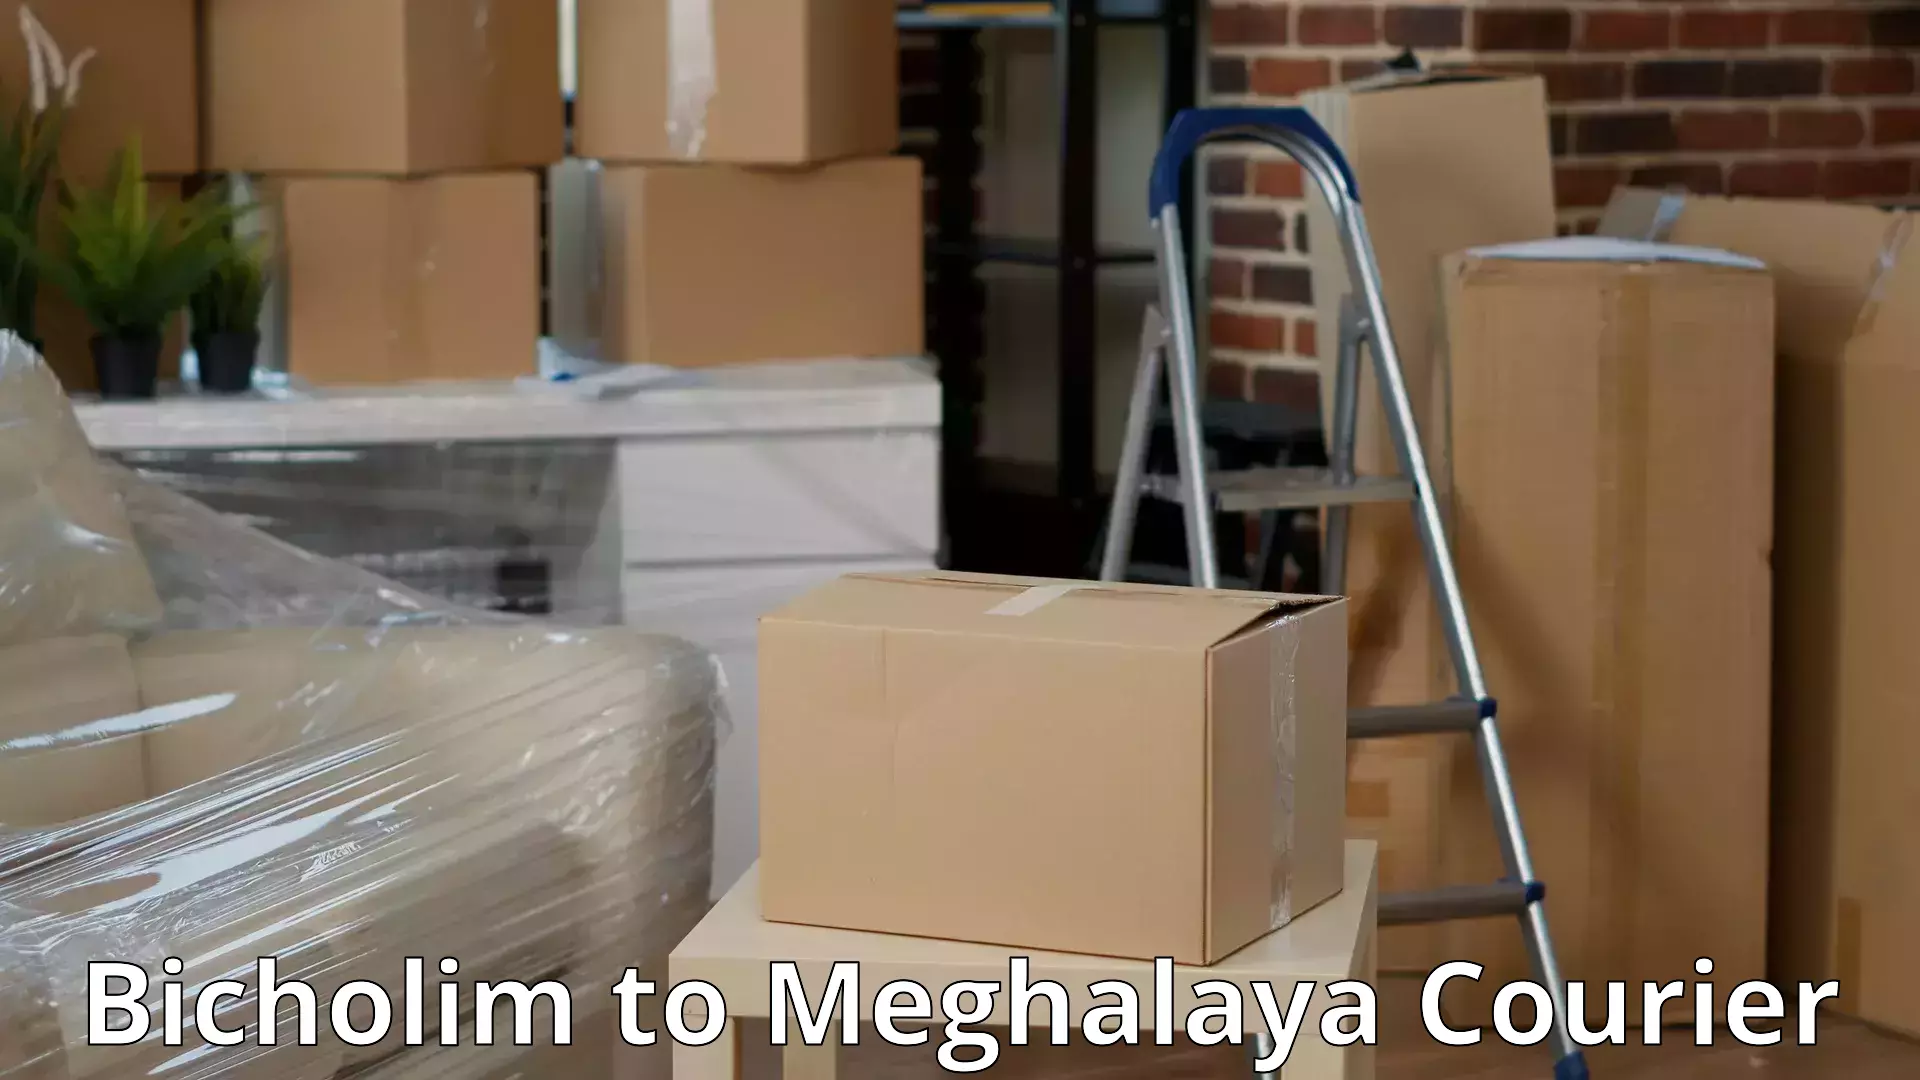 Home relocation experts Bicholim to Meghalaya